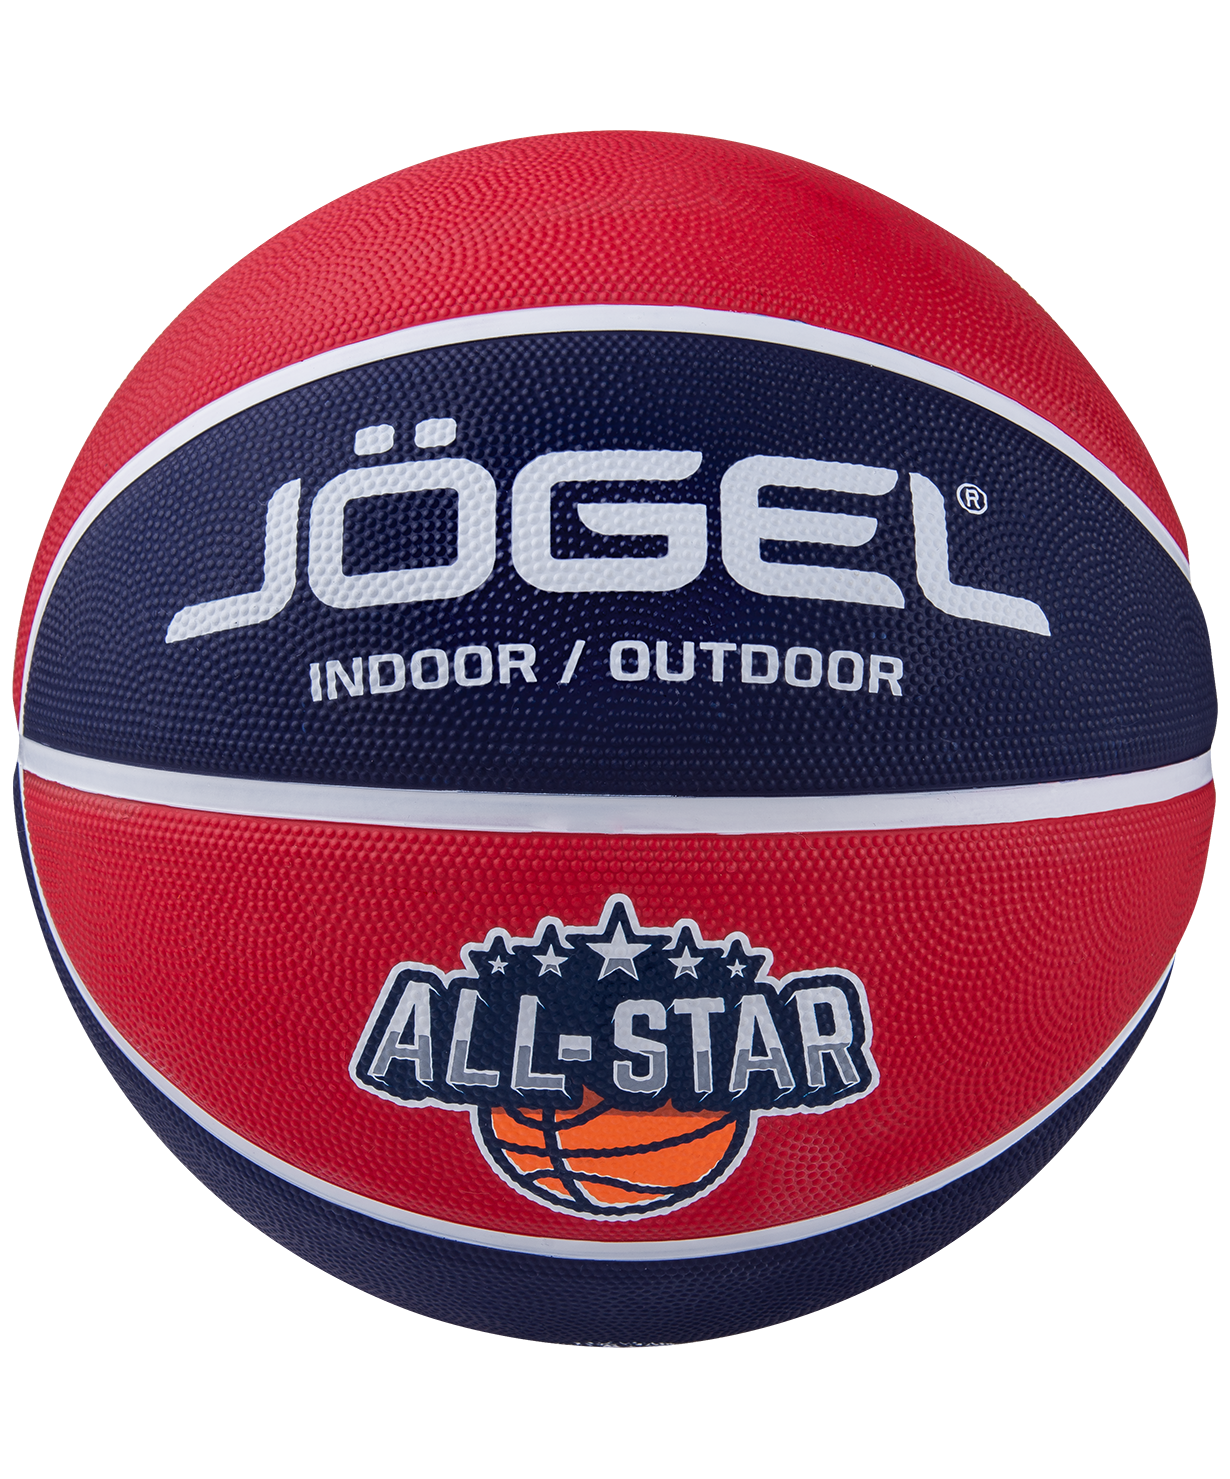 Мяч баскетбольный Jogel Streets All-Star №7, 1 шт.